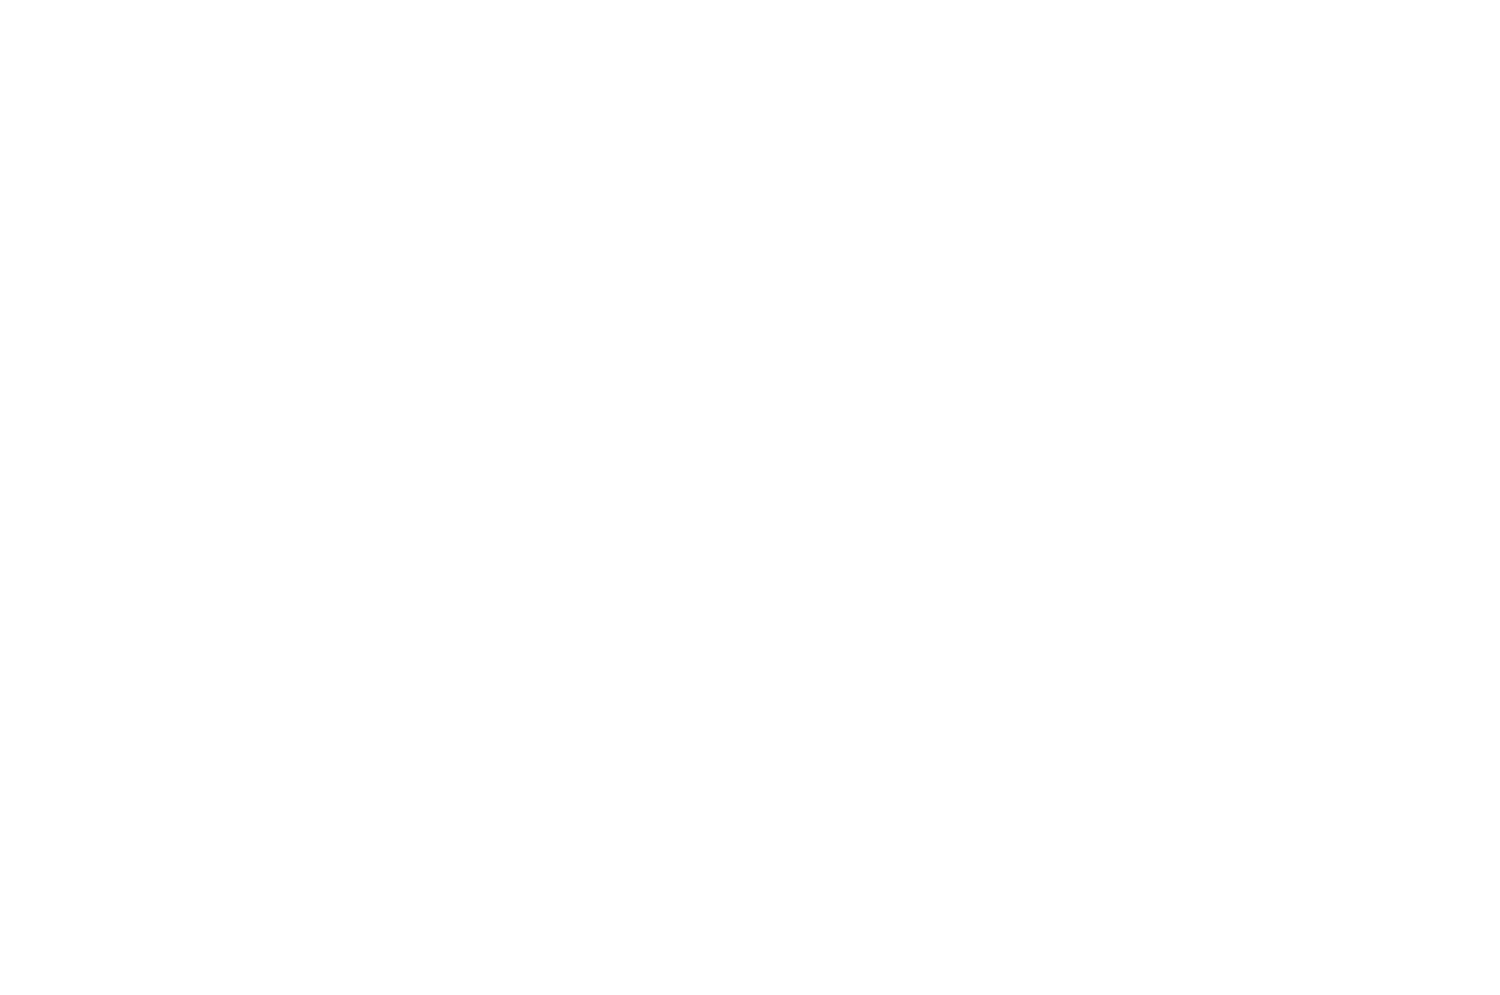 BASW Cymru white logo